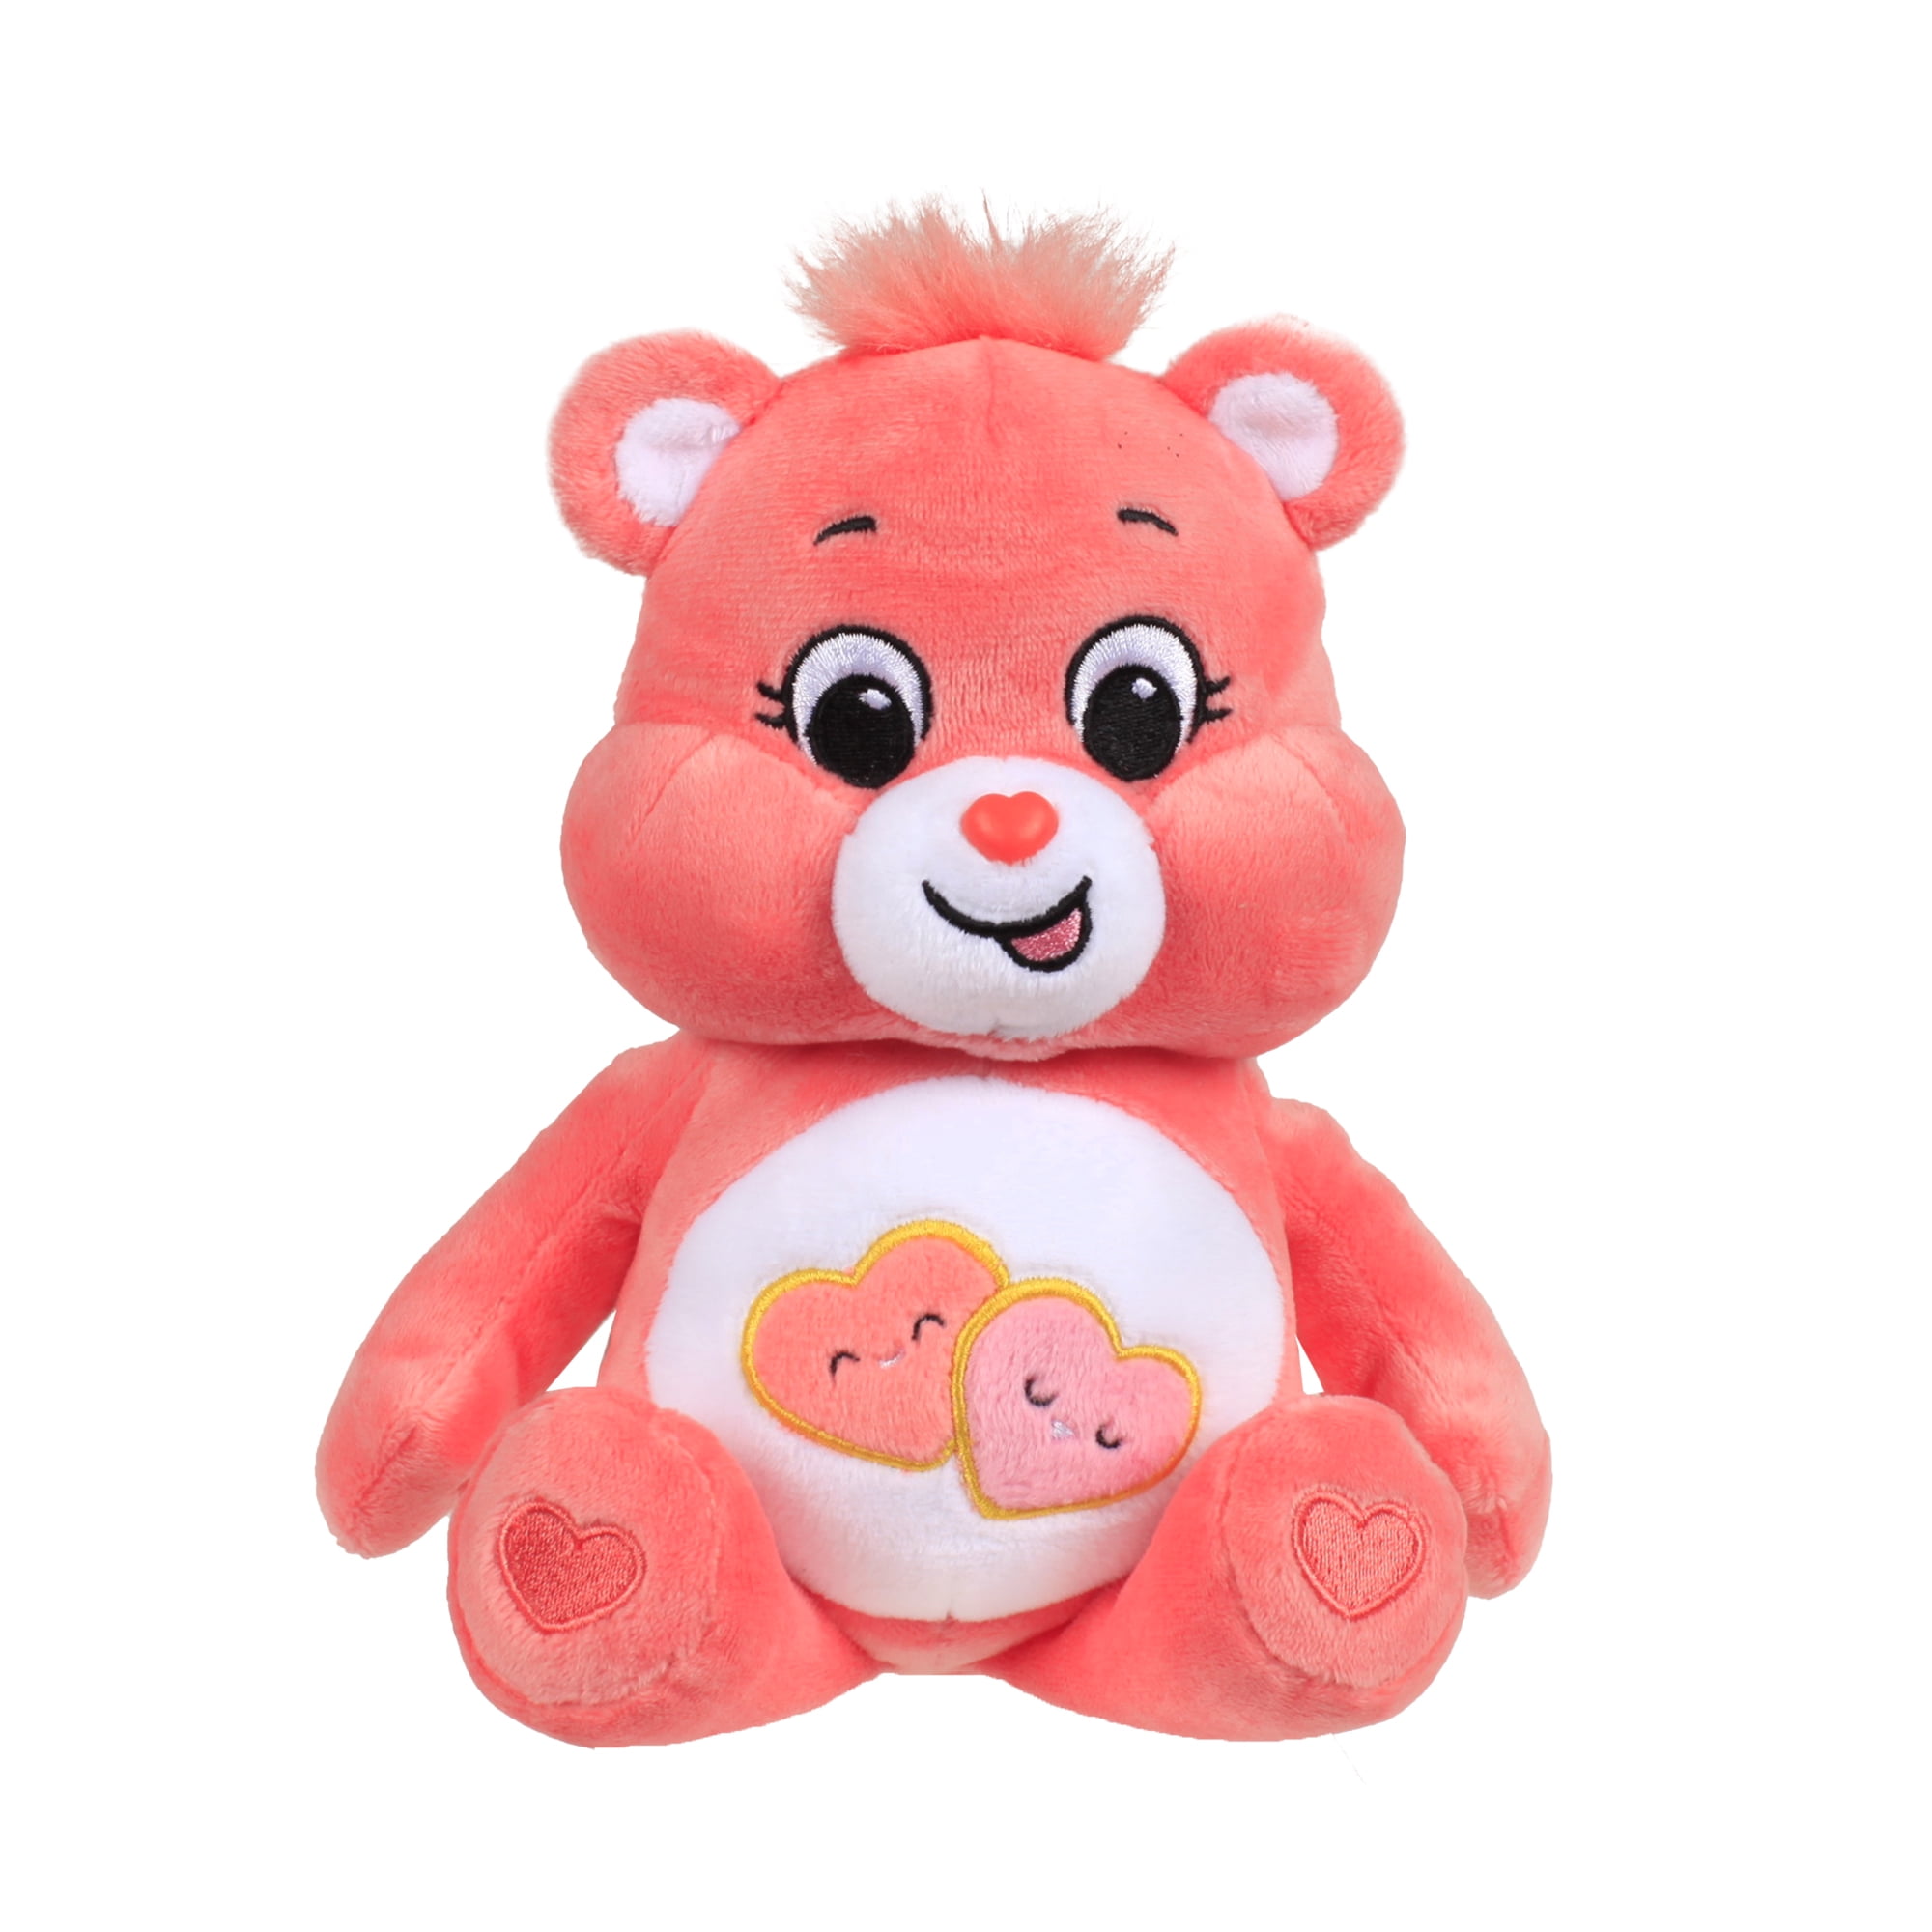 NEW 2020 Care Bears 9" Bean Plush Soft Huggable GOOD LUCK BEAR 